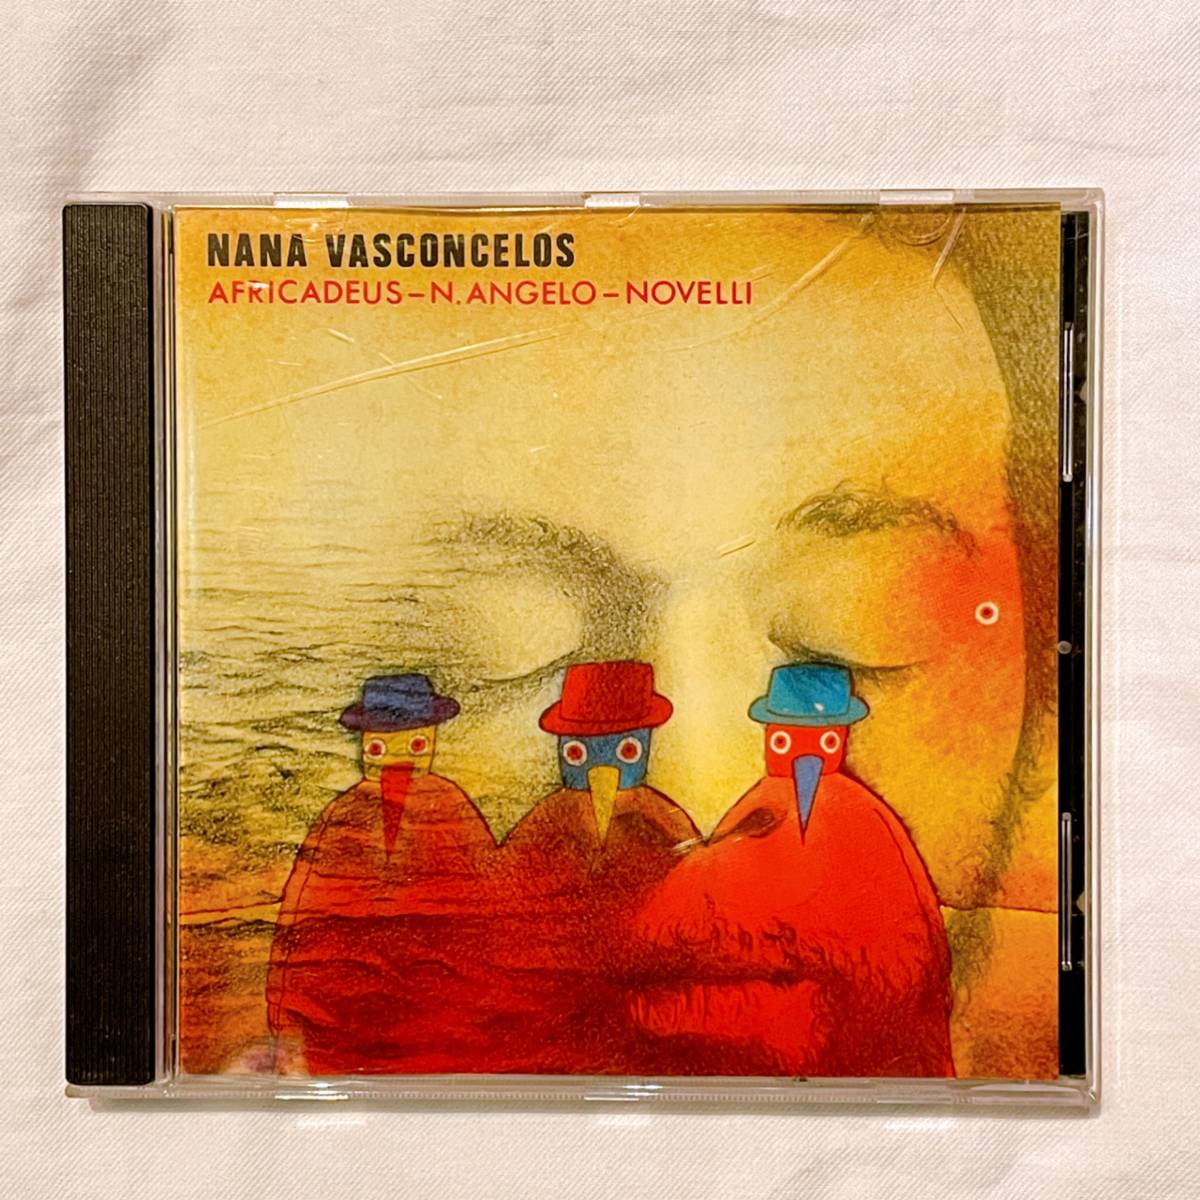 Nana Vasconcelos CD ナナヴァスコンセロス 中古 AFRICADEUS-N.ANGELO-NOVELLI アフロ ブラジリアン カリブ音楽 ジャズ US盤 アメリカ購入の画像6